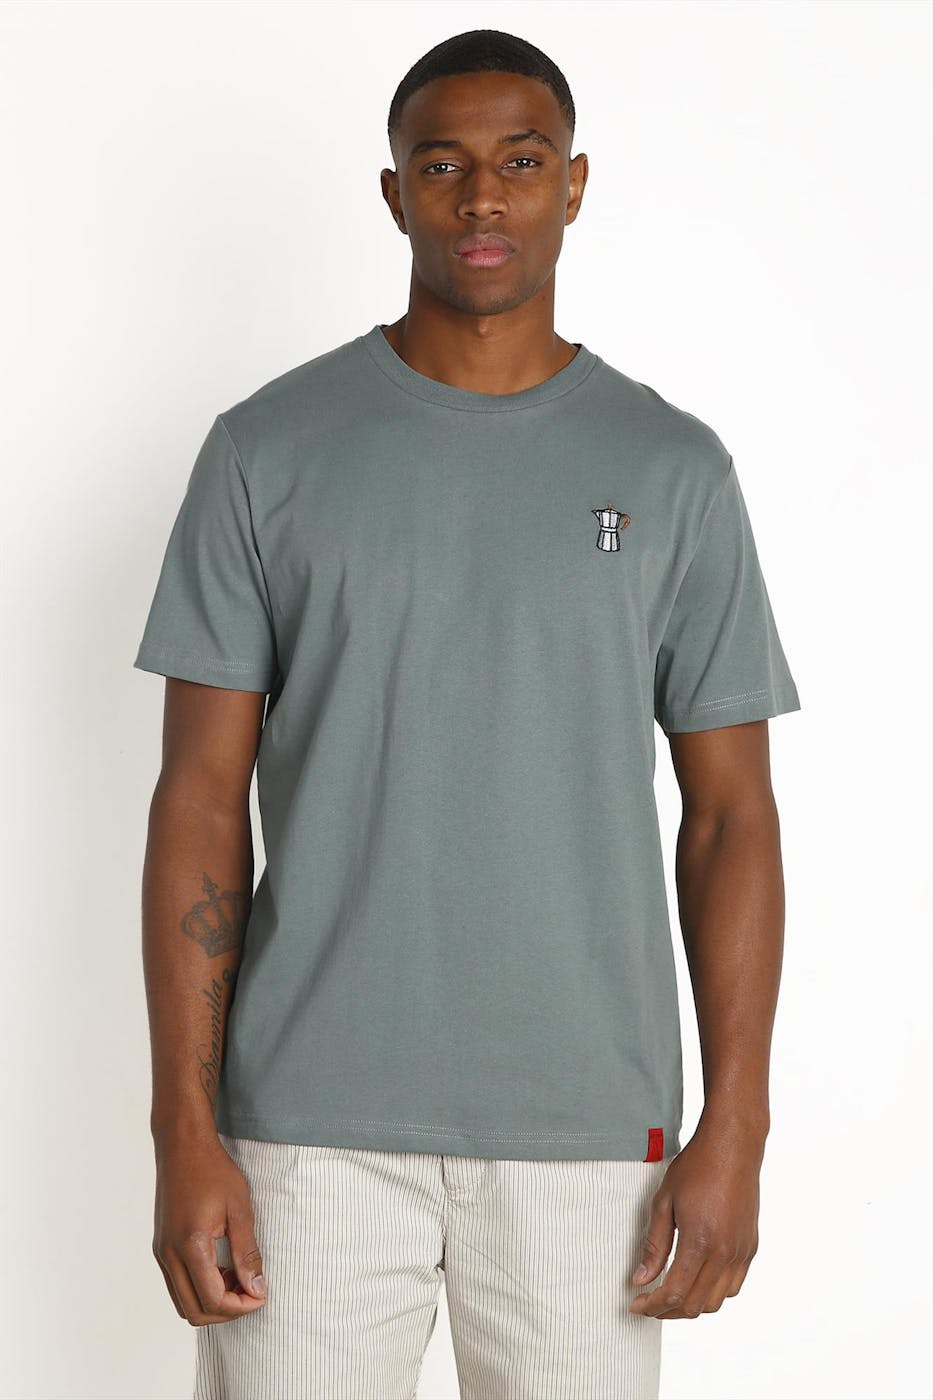 Antwrp - Groene Percolator T-shirt